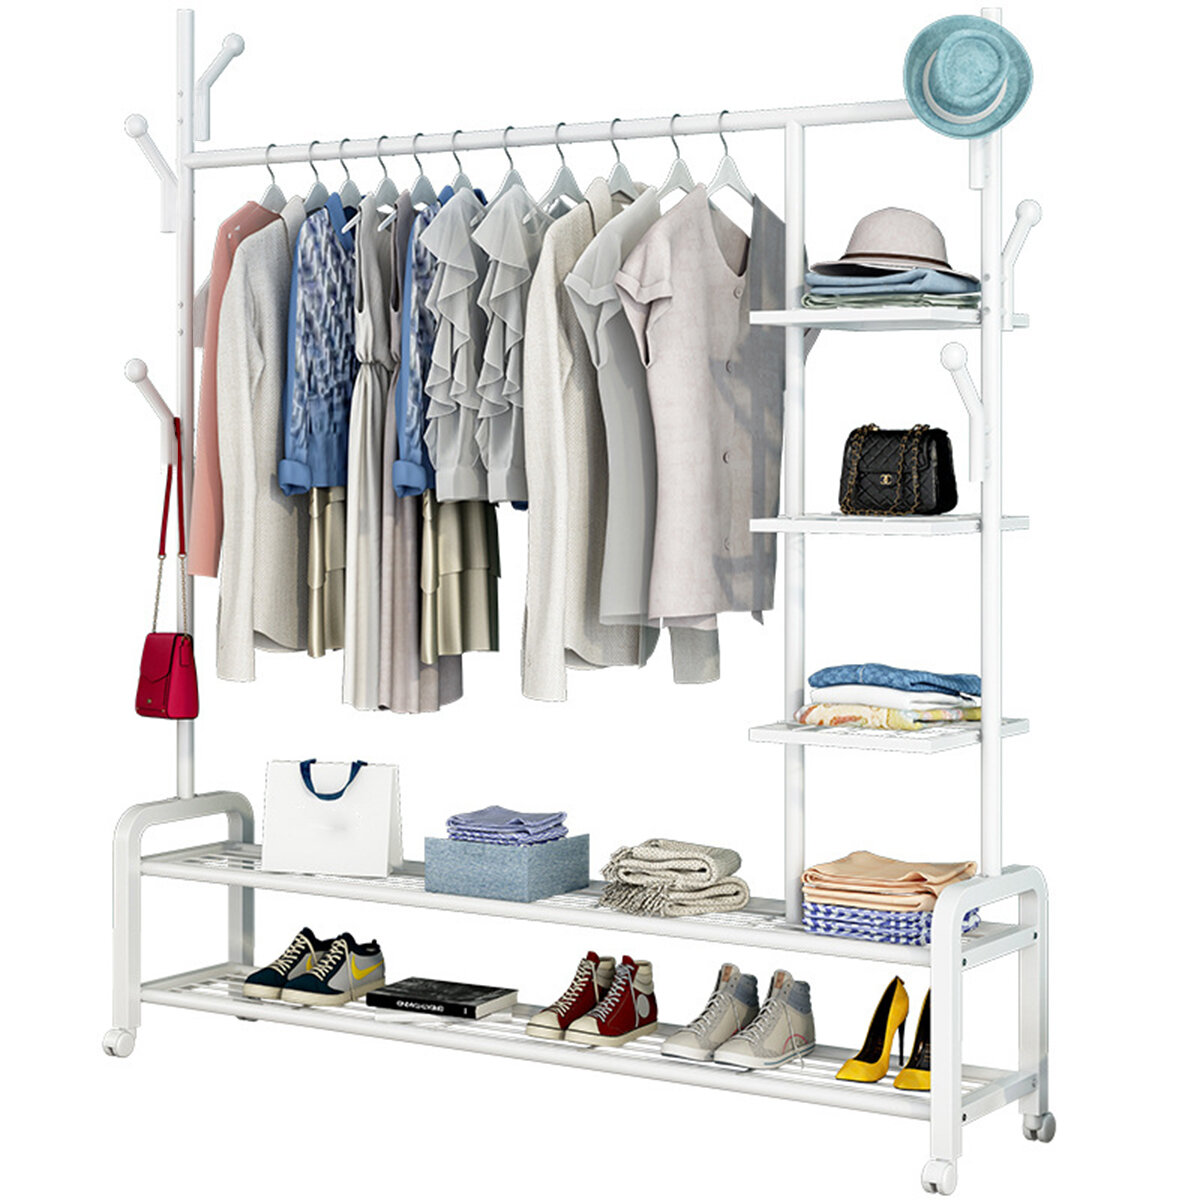 

ANLIN X-003 Portable Metal Clothes Organizer Closet Hanger Shoes Storage Rack Garment Shelf